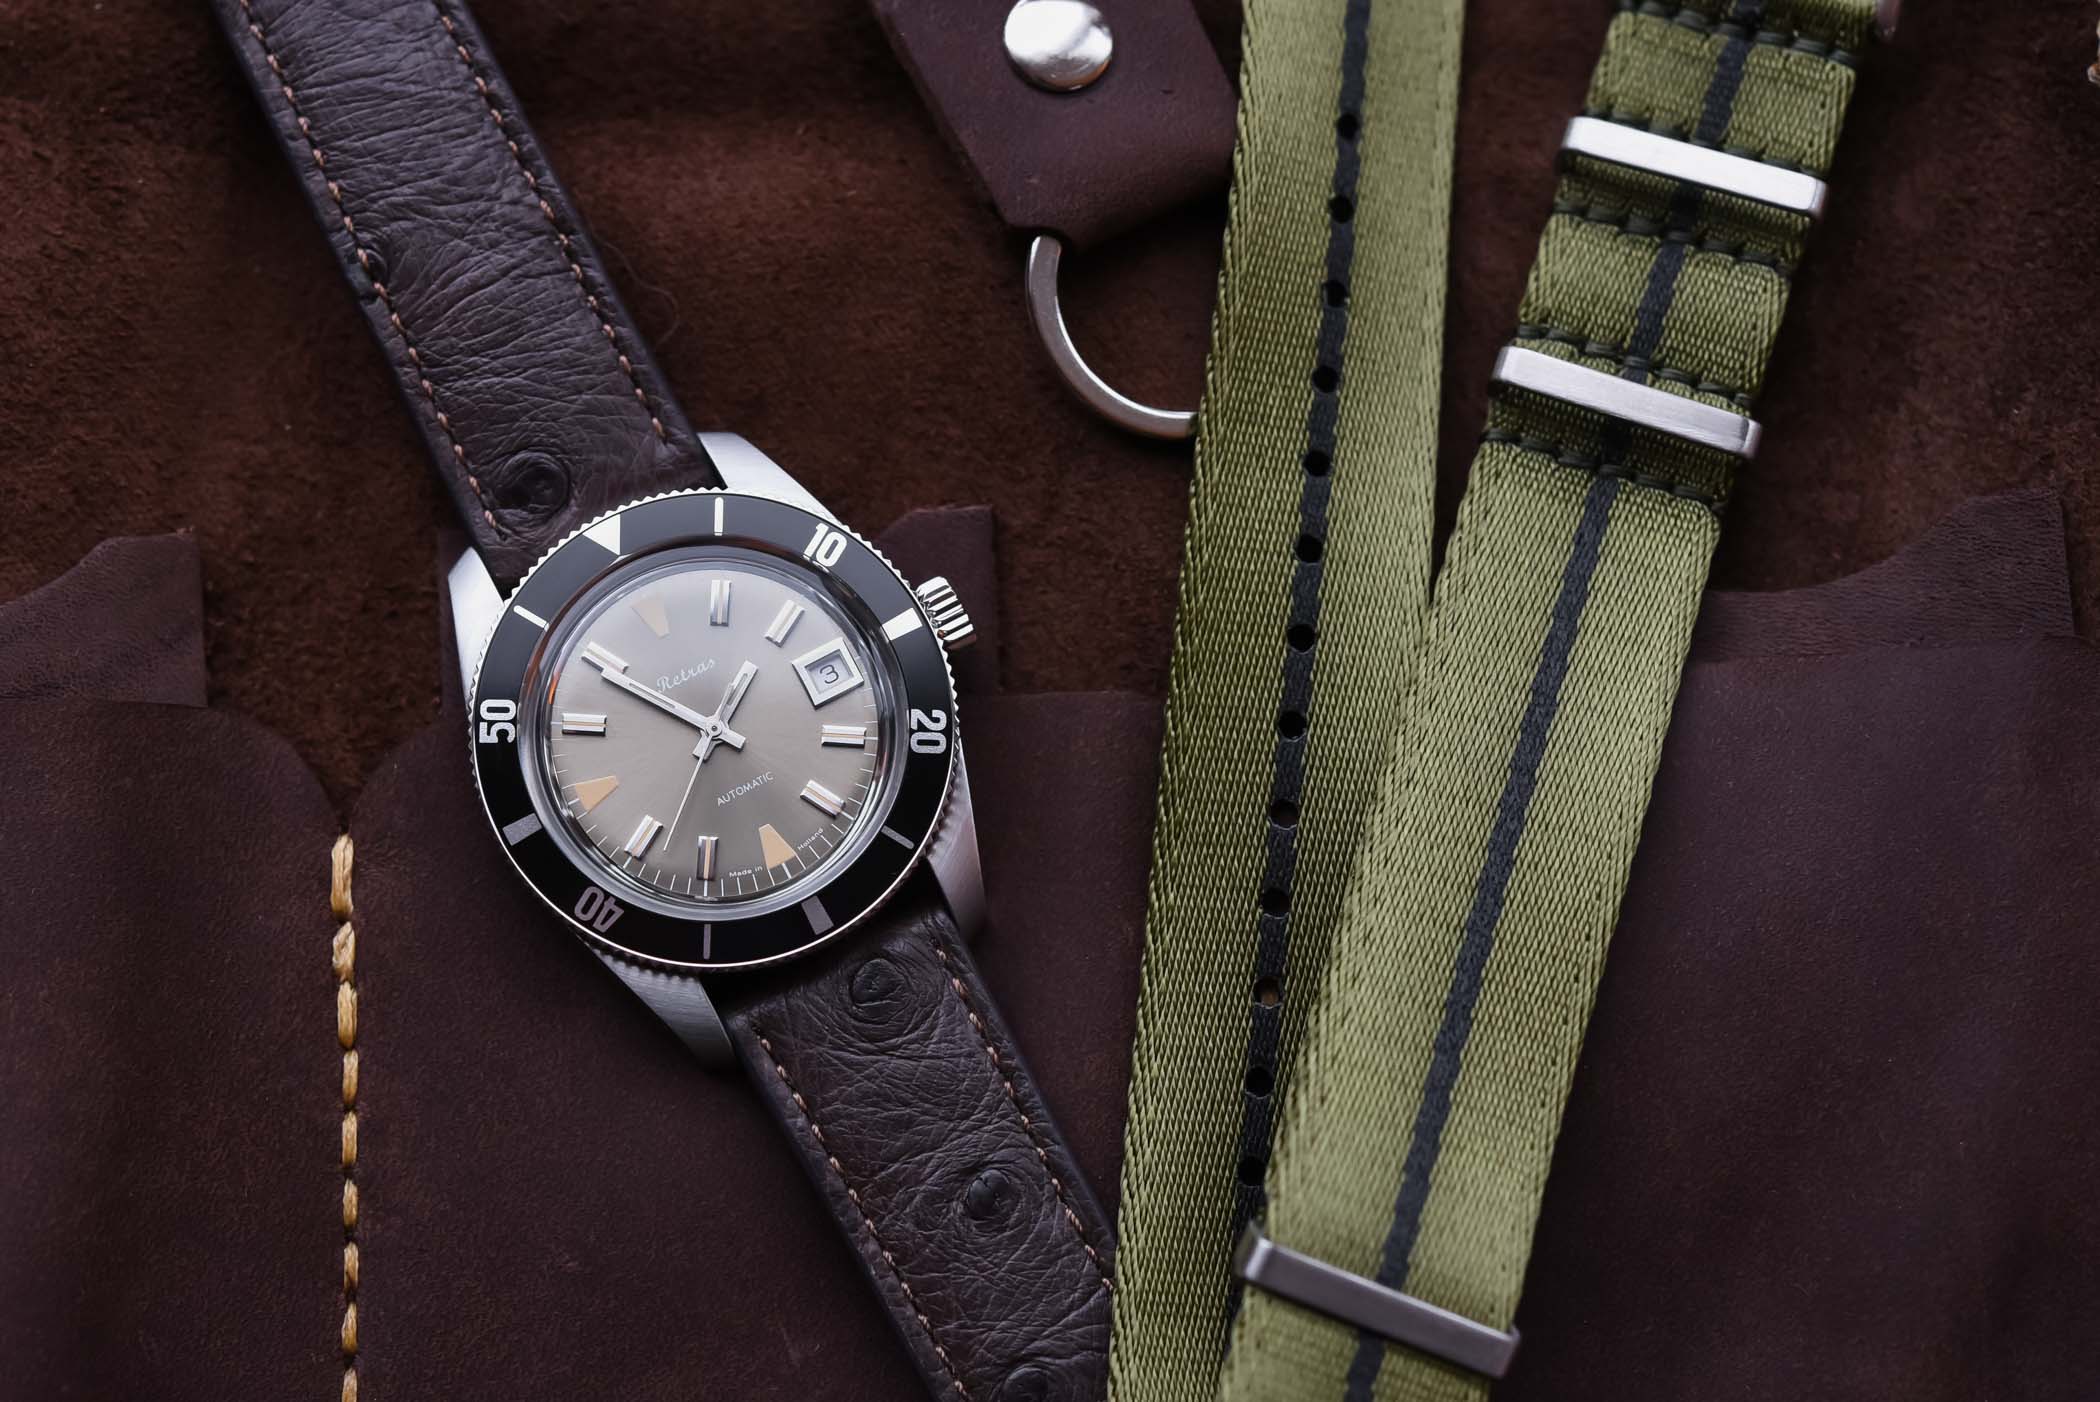 Retras Diver - Vintage Inspired Dive Watch